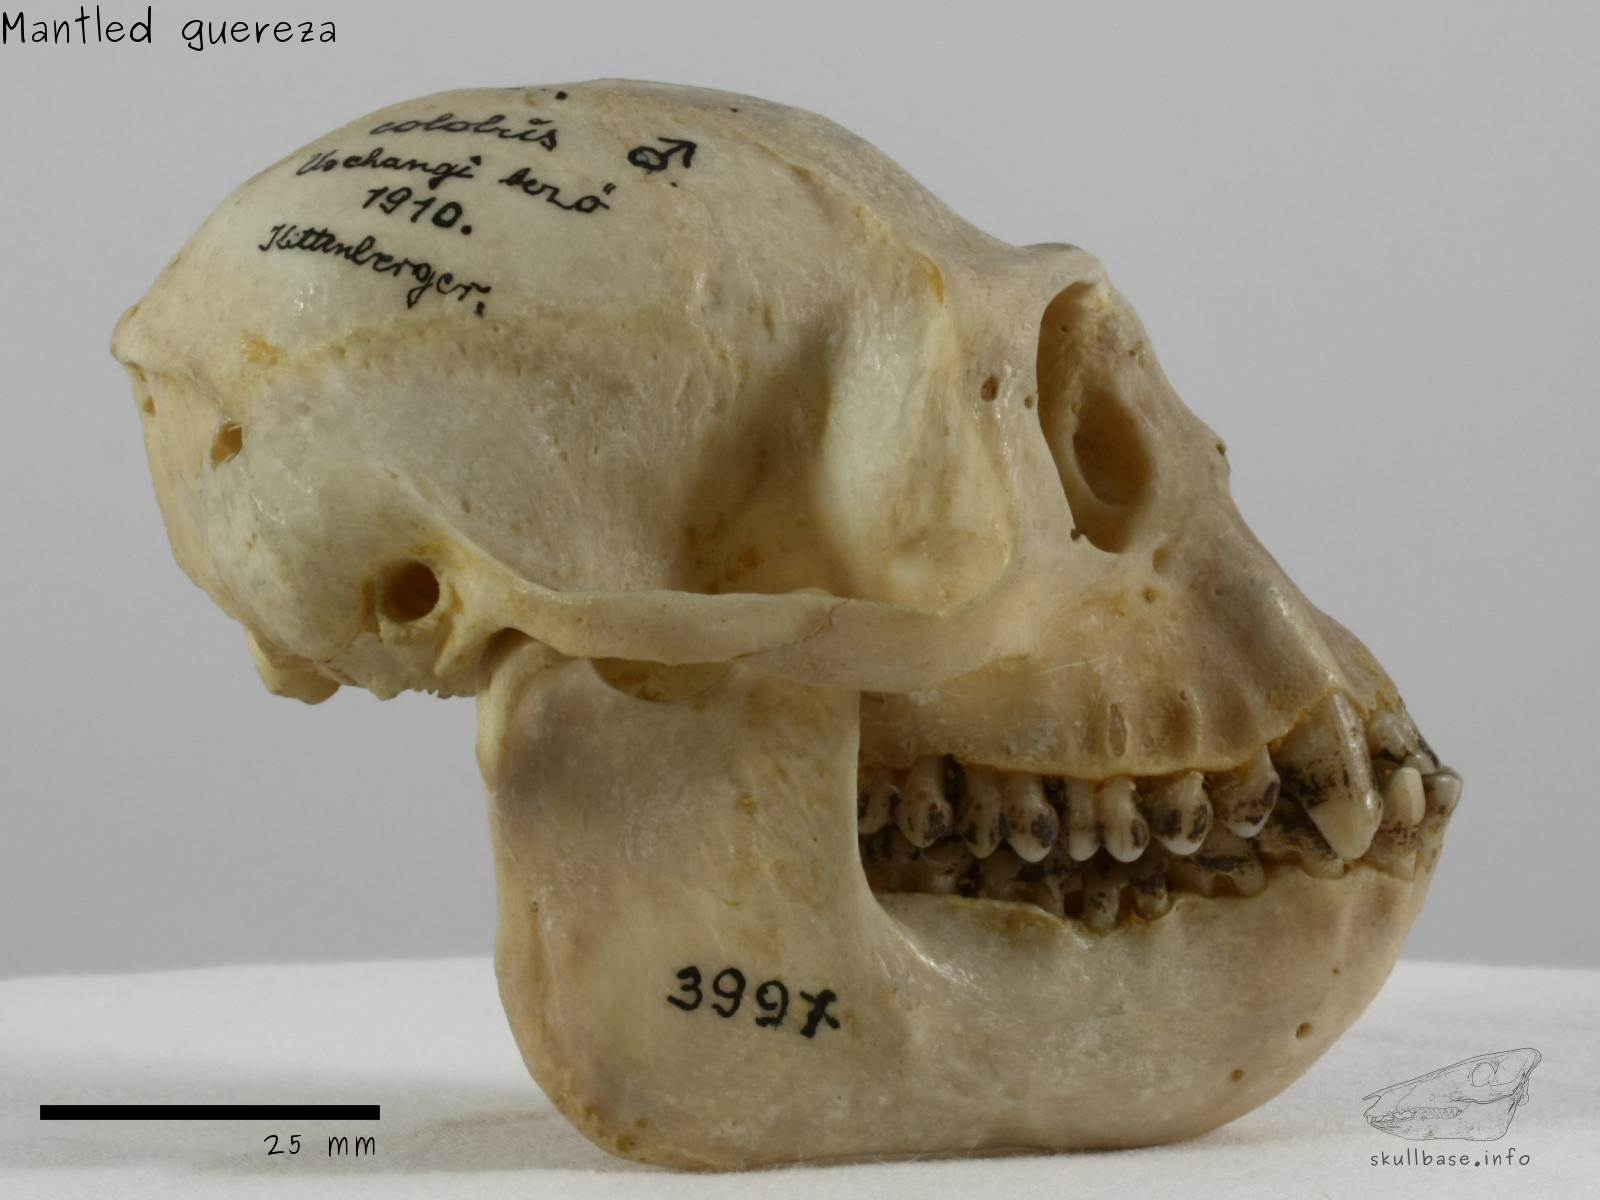 Mantled guereza (Colobus guereza) skull lateral view